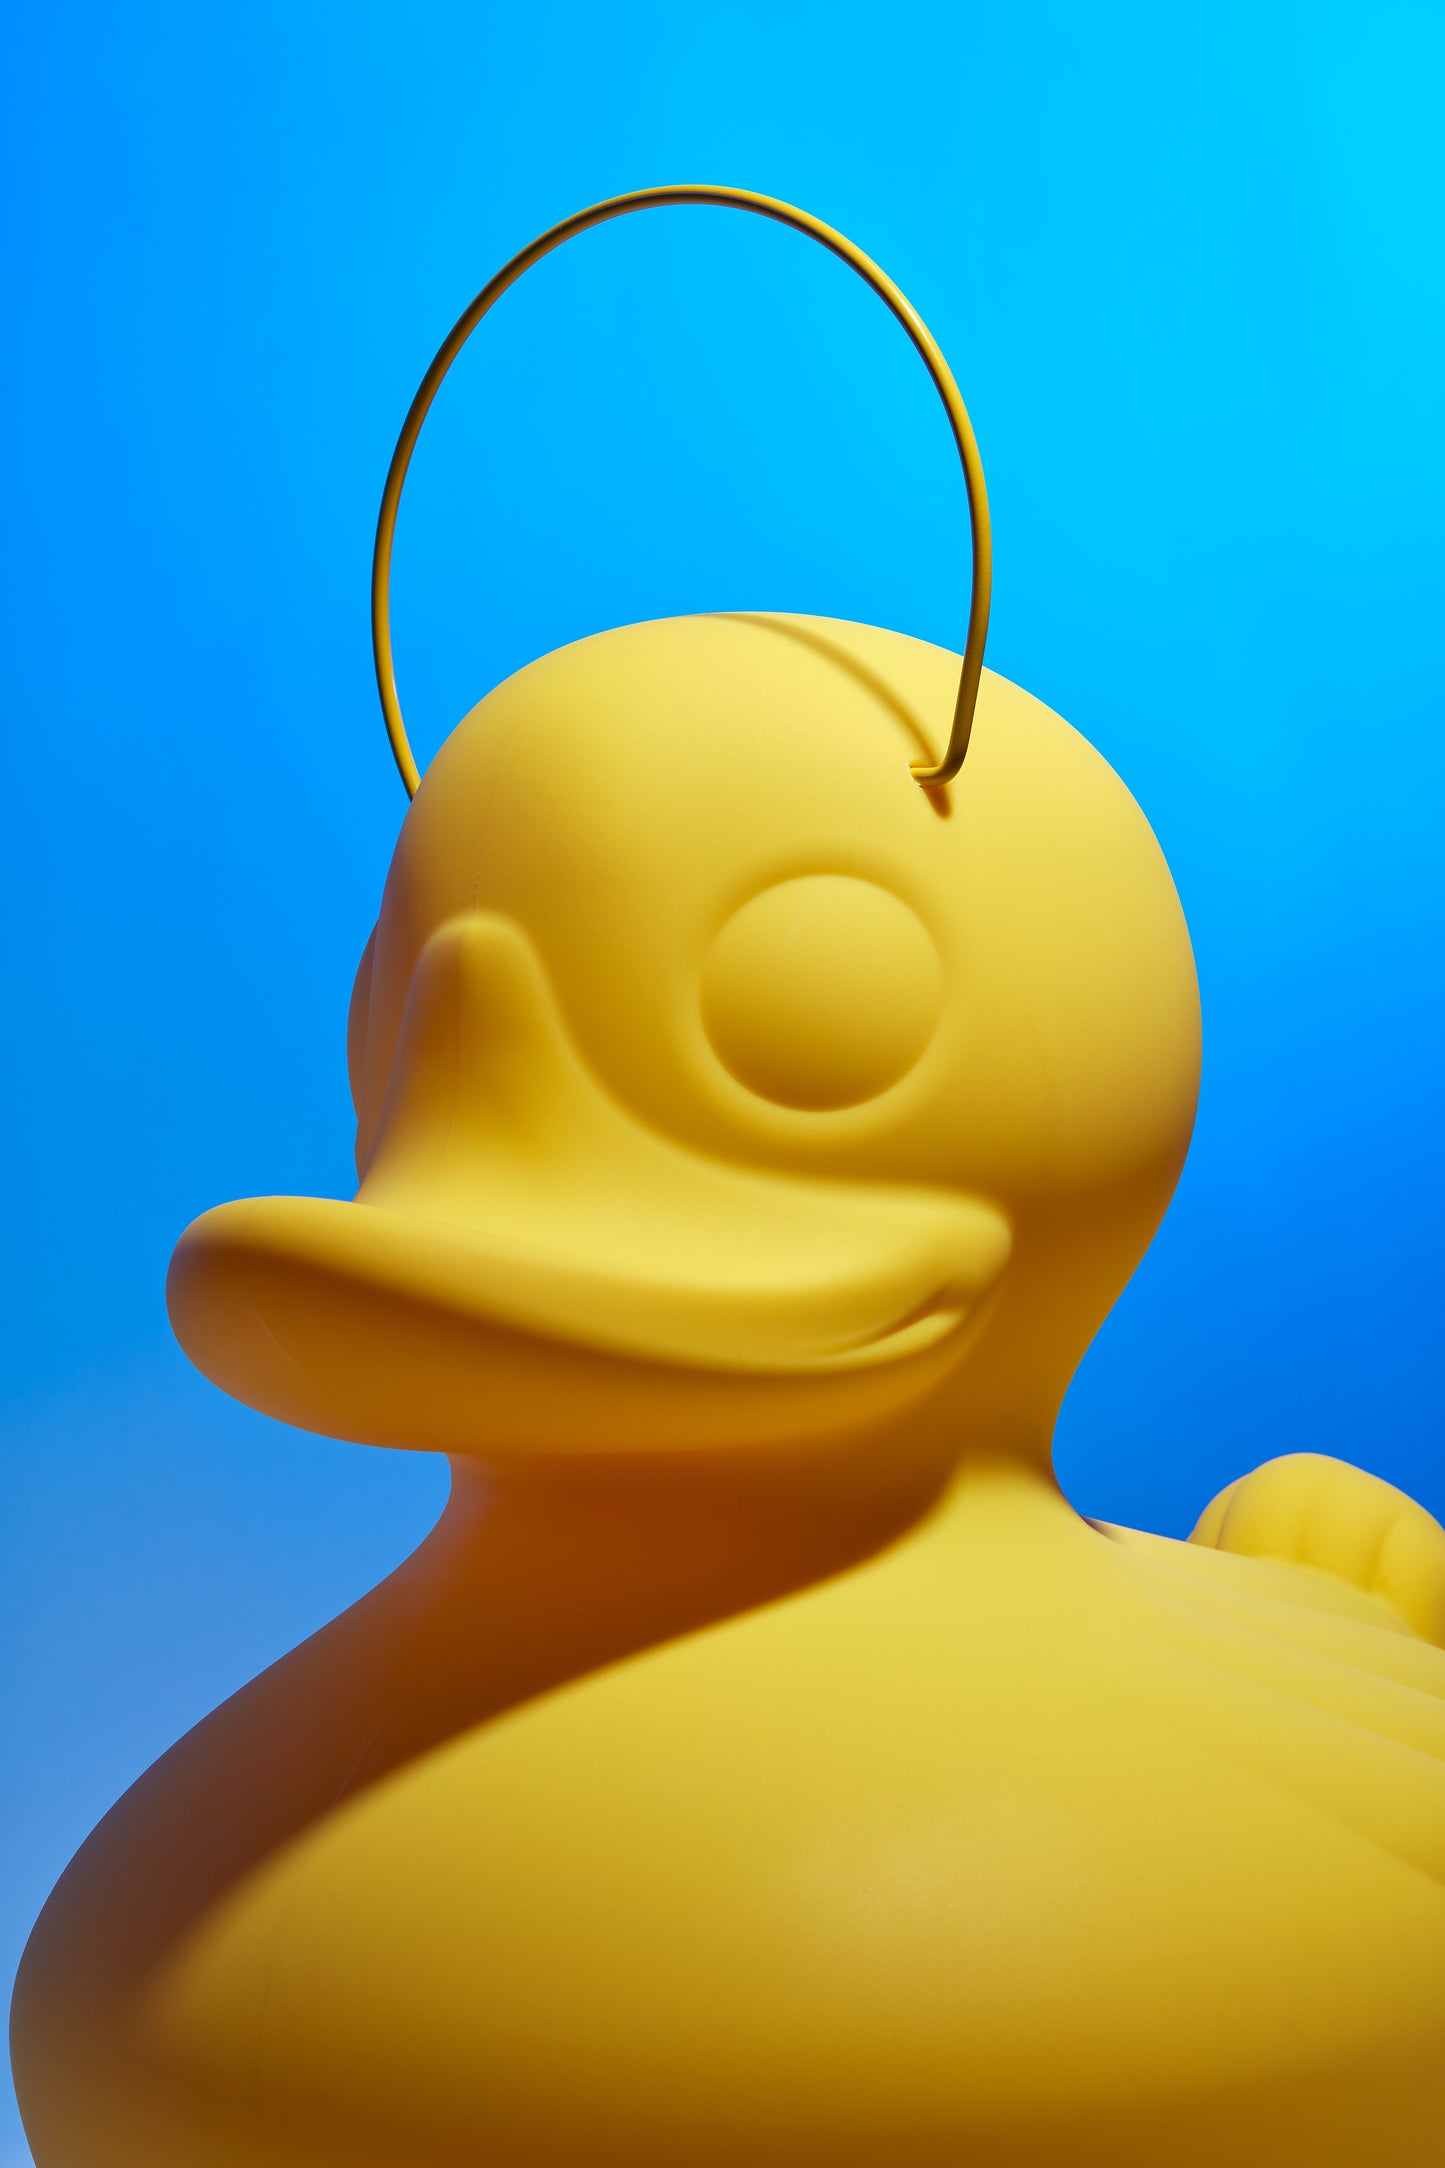 Duck lamp "The Duck Duck Lamp" Yellow XL